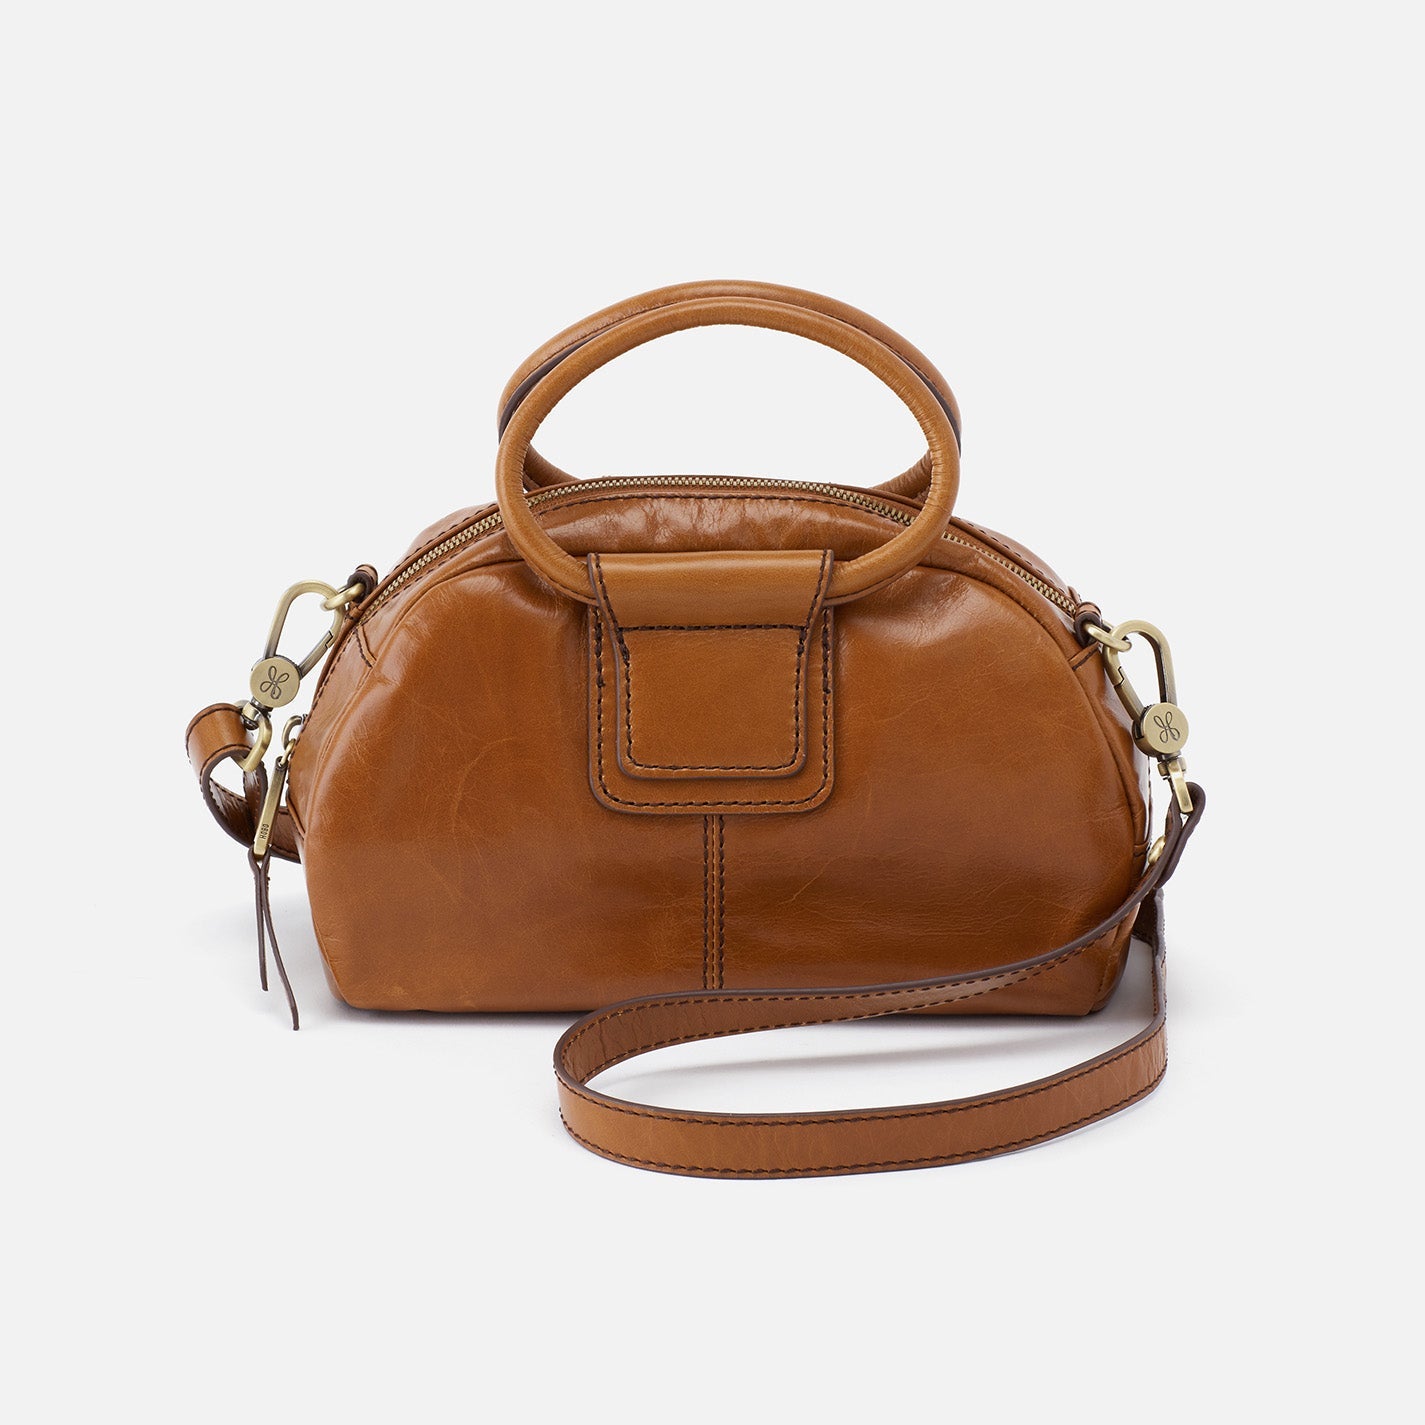 Buy Women's Shoulder Handbag STEPHIECATH Genuine Leather Large Slouch Hobo  Handmade Tote Vintage Snap Bag online